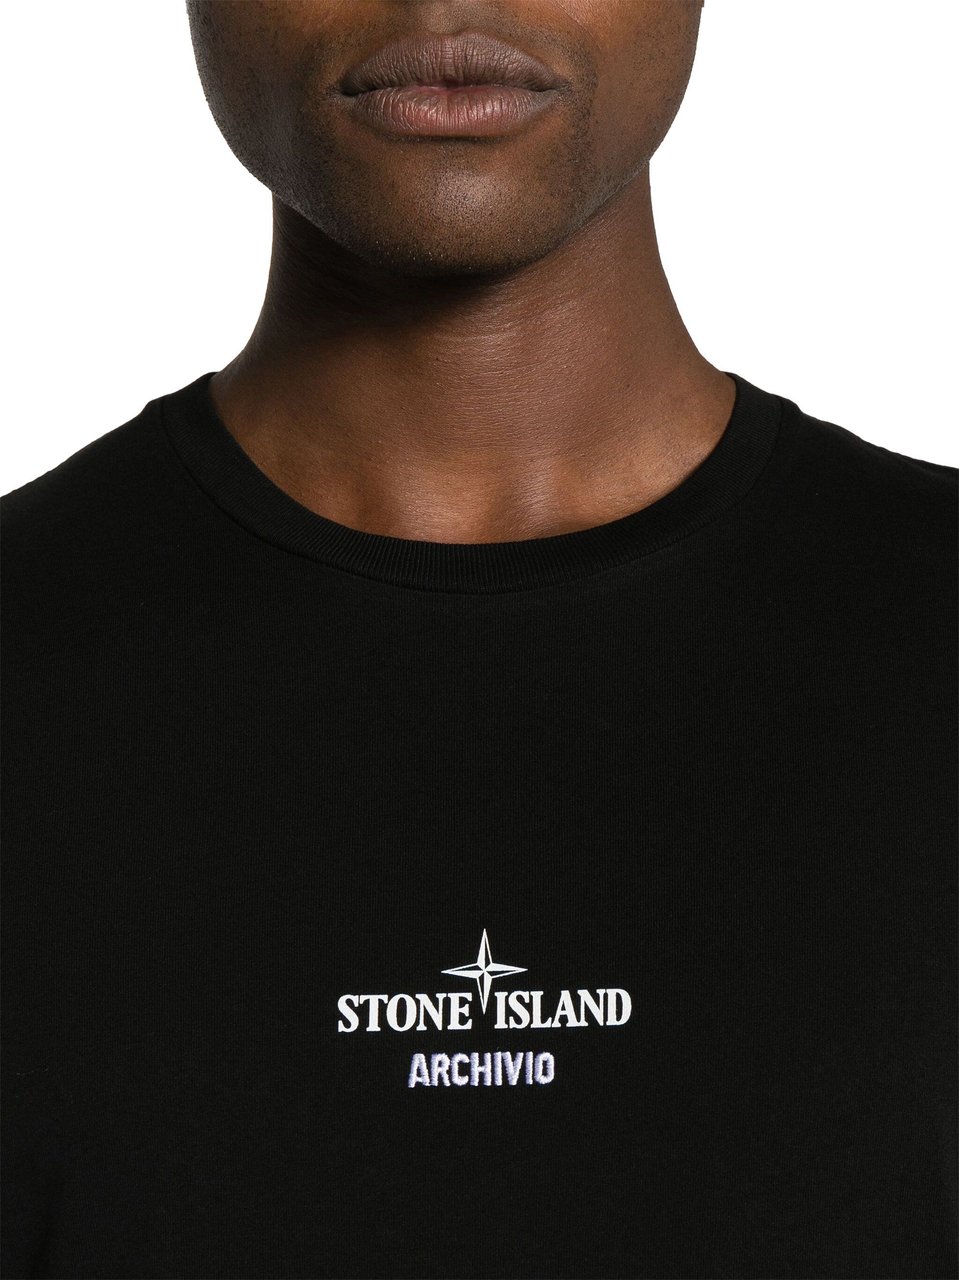 Stone Island black archivio t-shirt Zwart